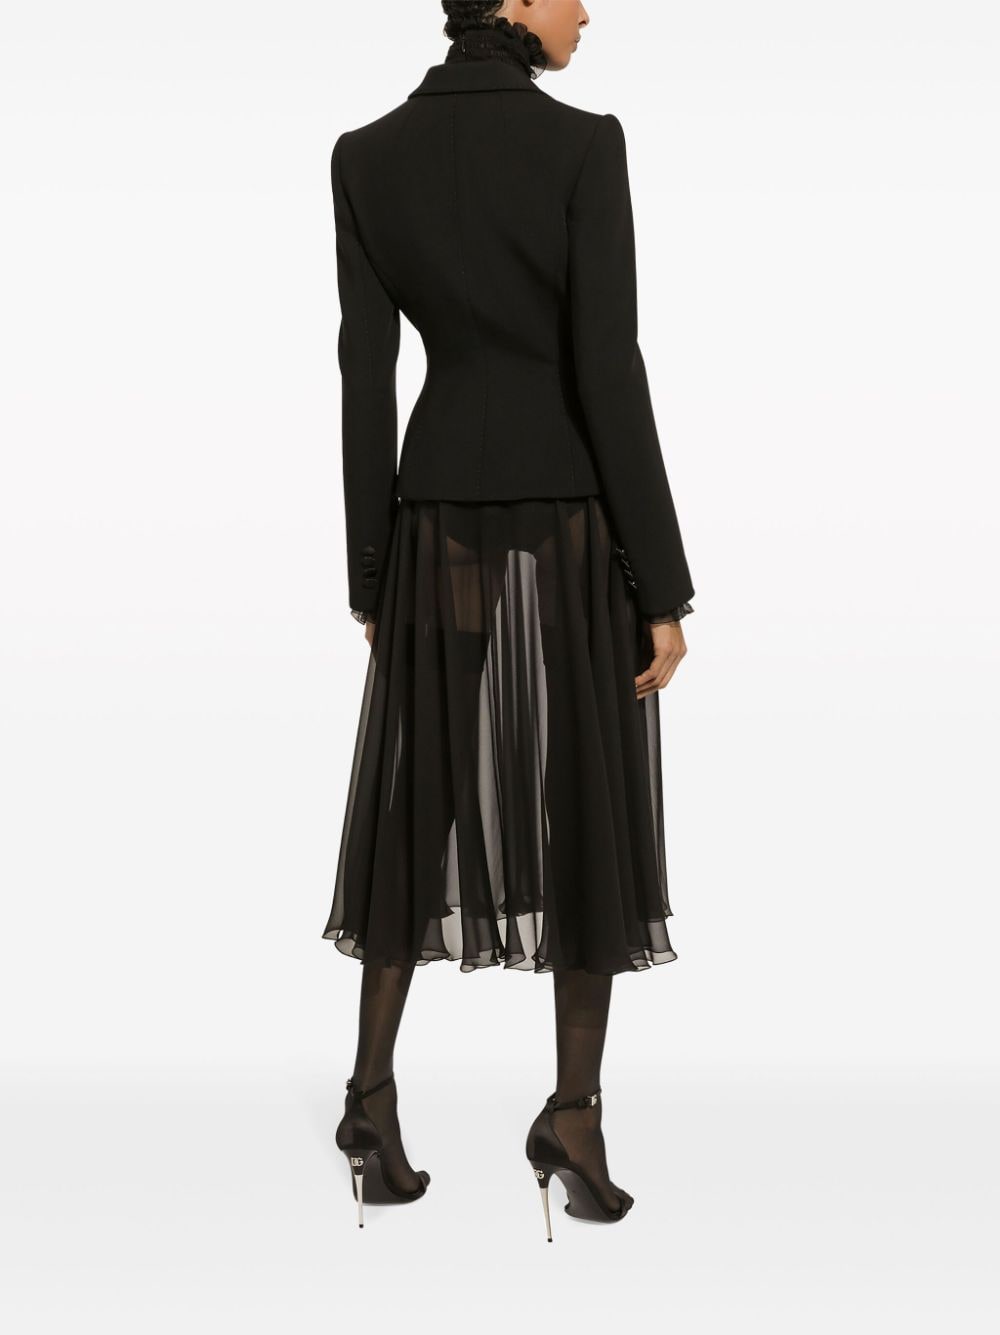 Shop Dolce & Gabbana Sophisticated Black Wool Blazer Jacket For Women